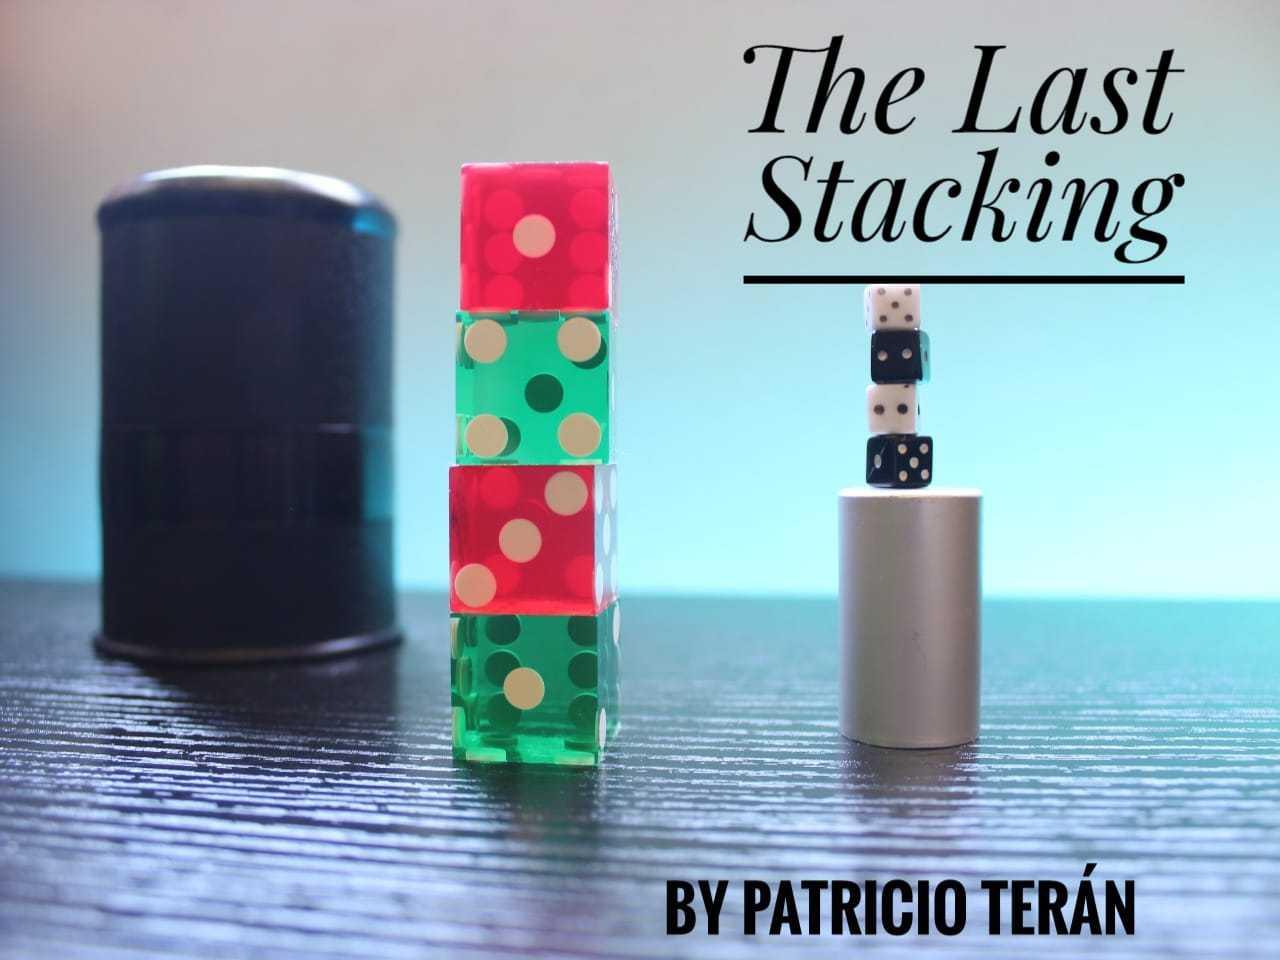 Patricio Teran - The Last stacking